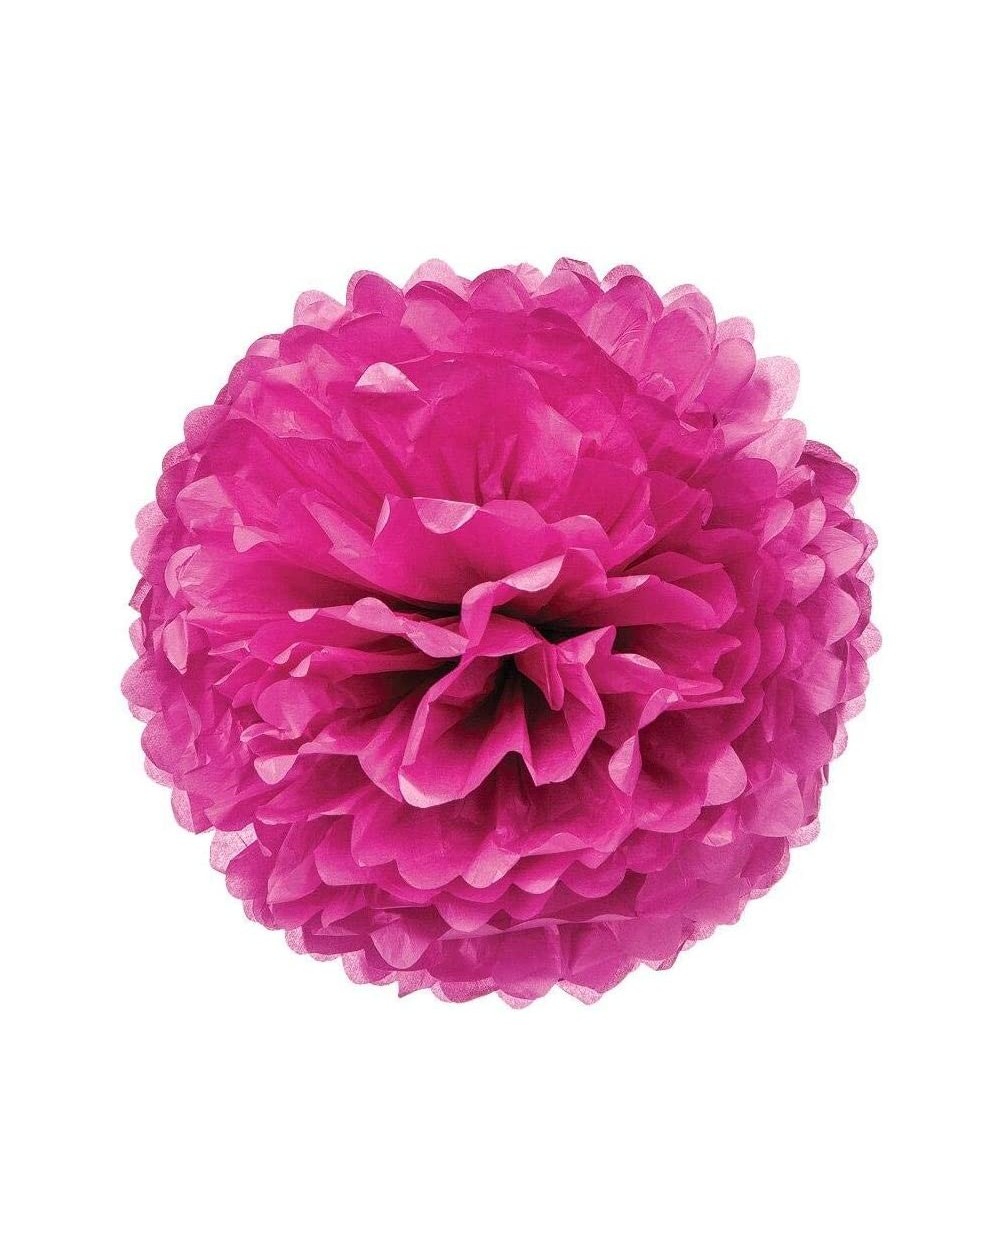 Tissue Pom Poms Tissue Paper Pom Pom (10-Inch- Sorbet Pink- Single) - Hanging Paper Flower Ball Decor for Weddings- Bridal an...